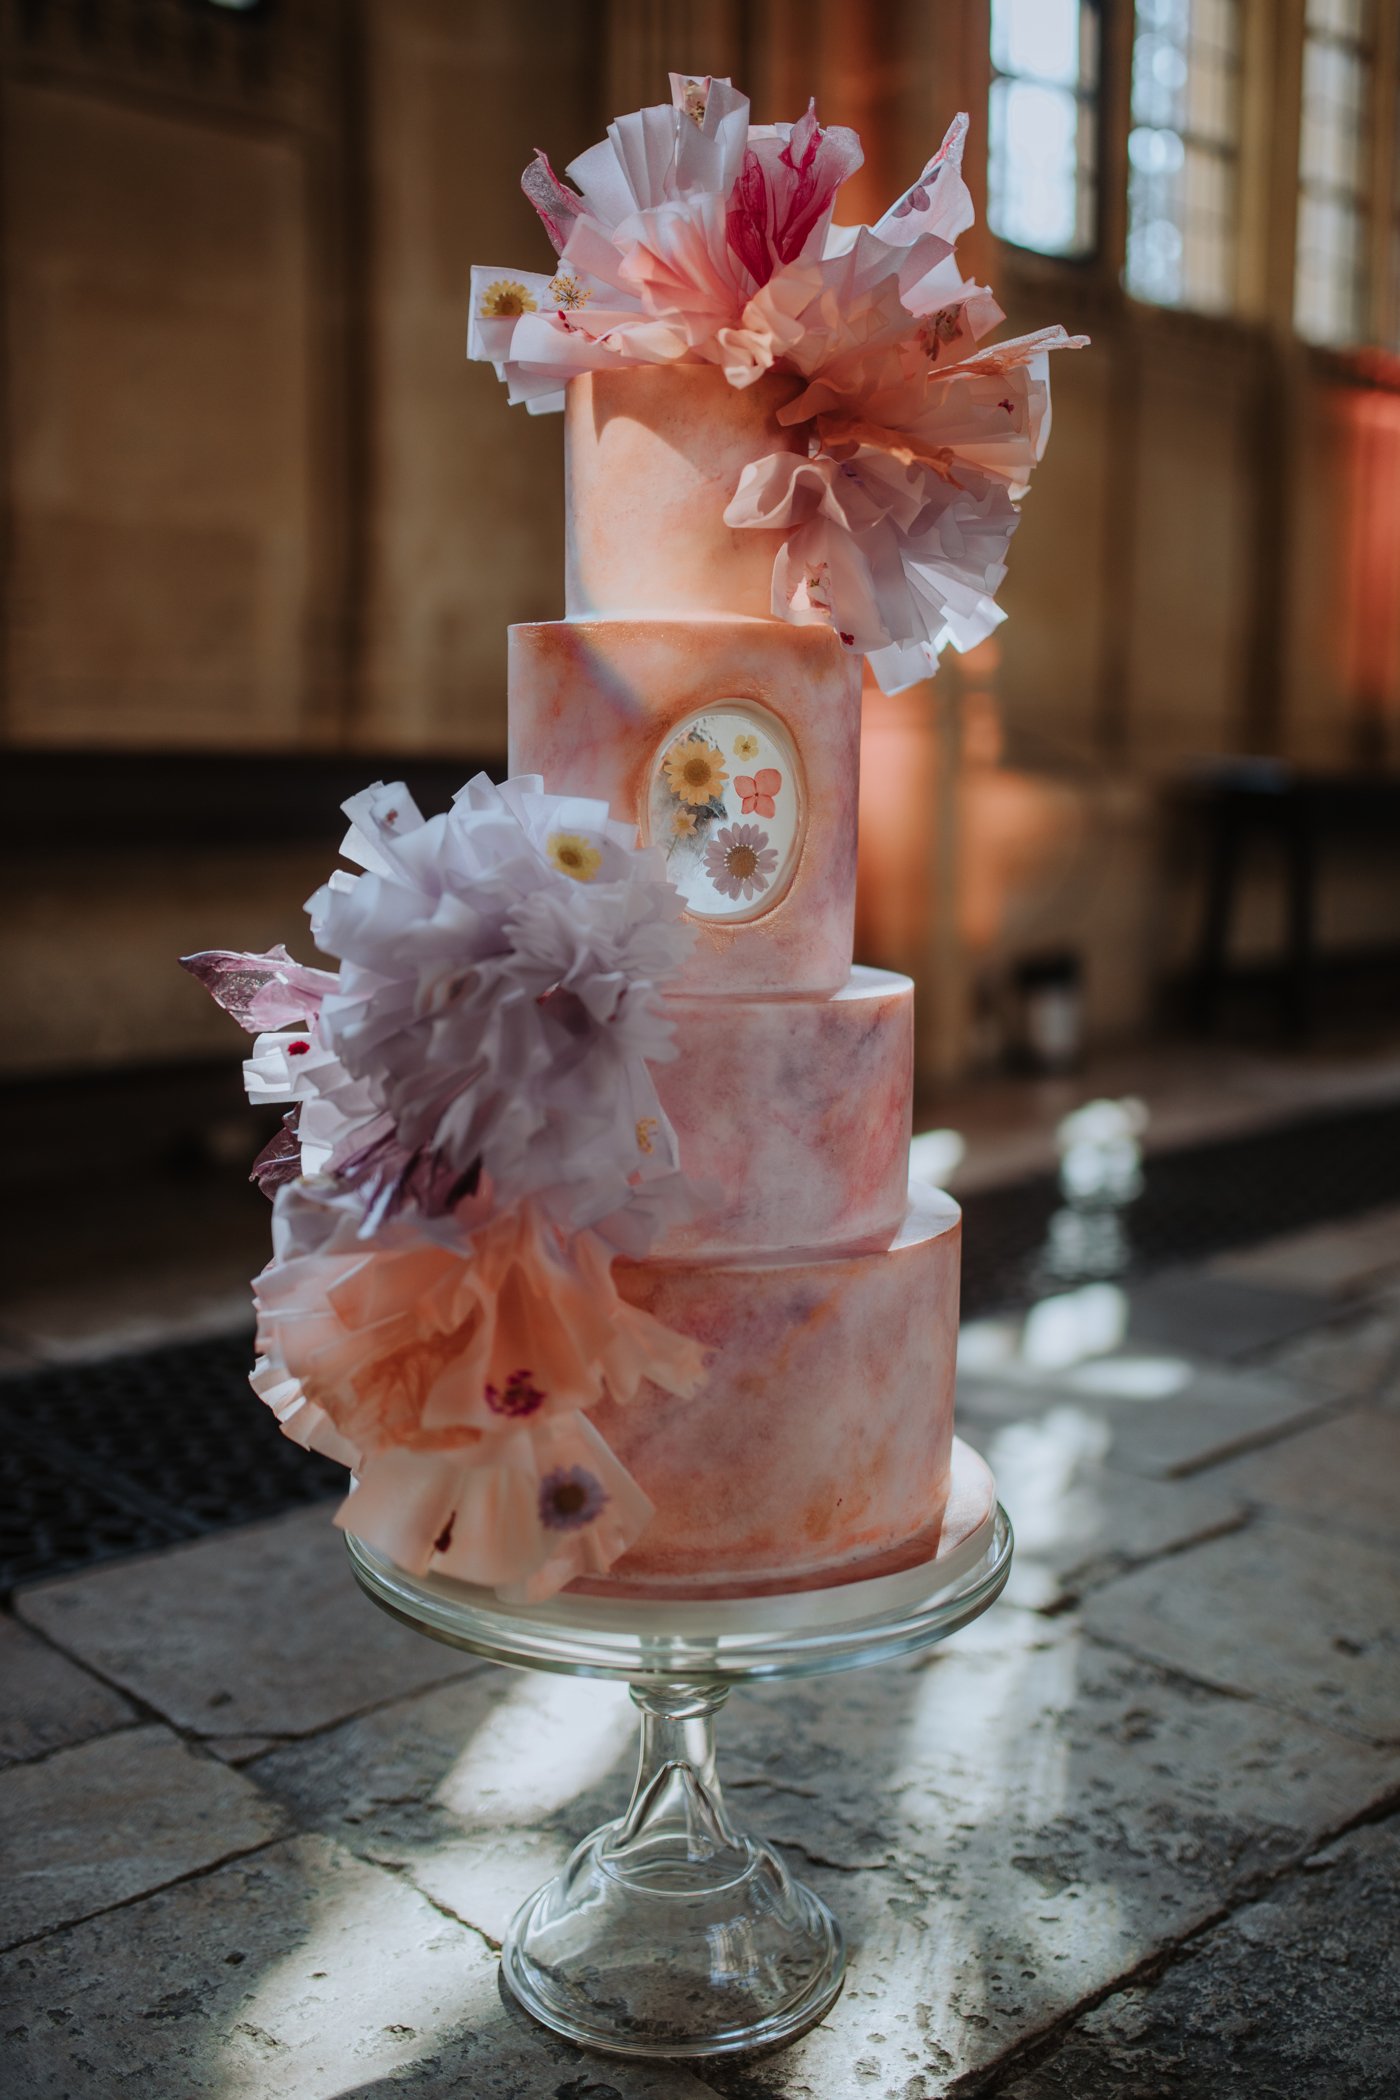 Stunning pastel wedding cake with ruffles